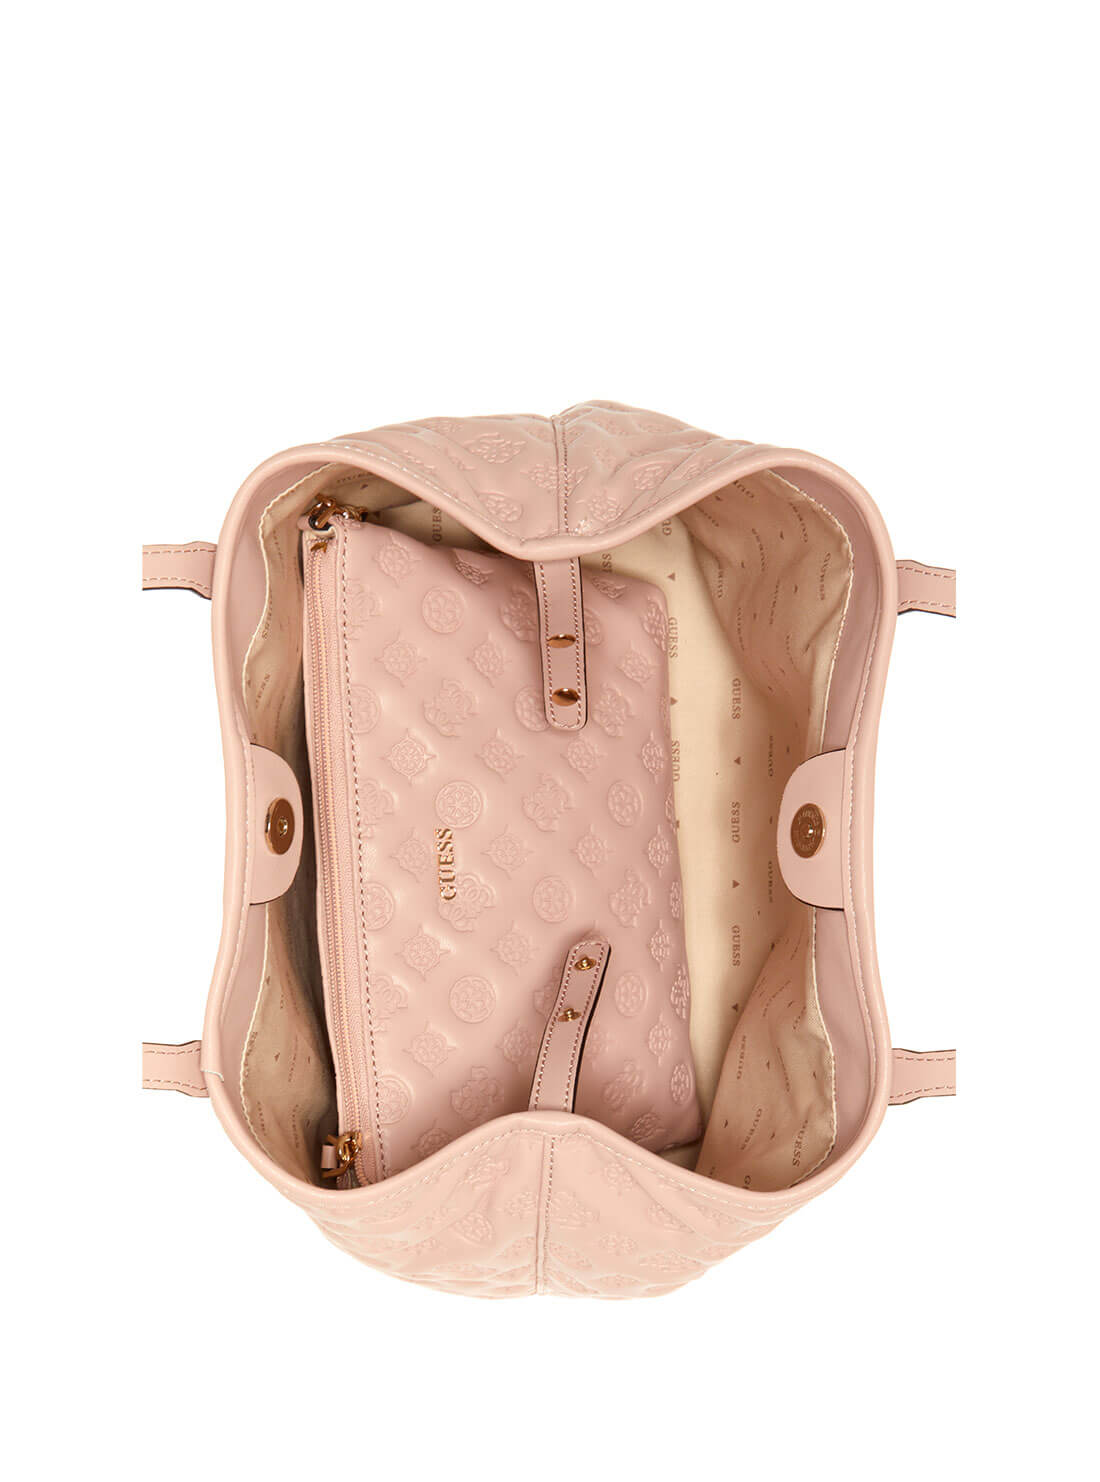 Rose La Femme Vikky Tote Bag | GUESS Women's Handbags | inside view